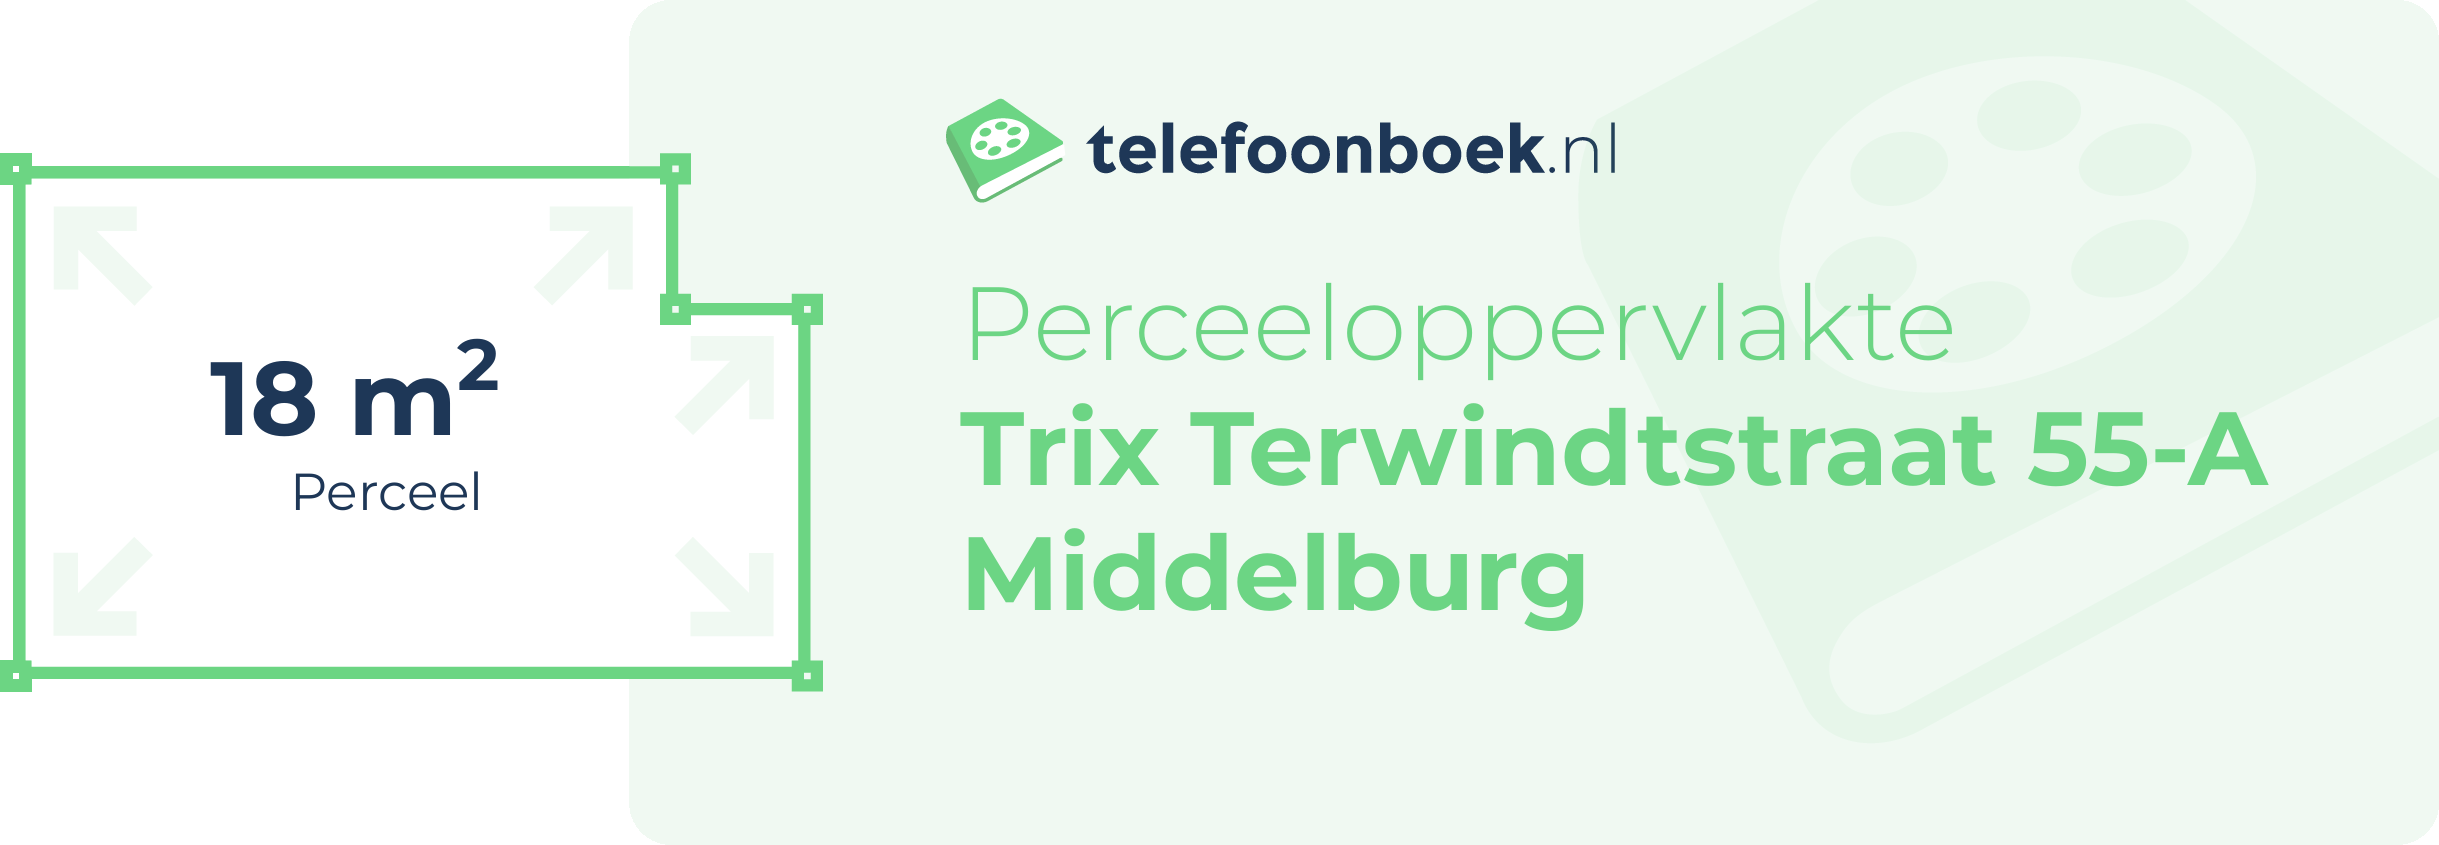 Perceeloppervlakte Trix Terwindtstraat 55-A Middelburg